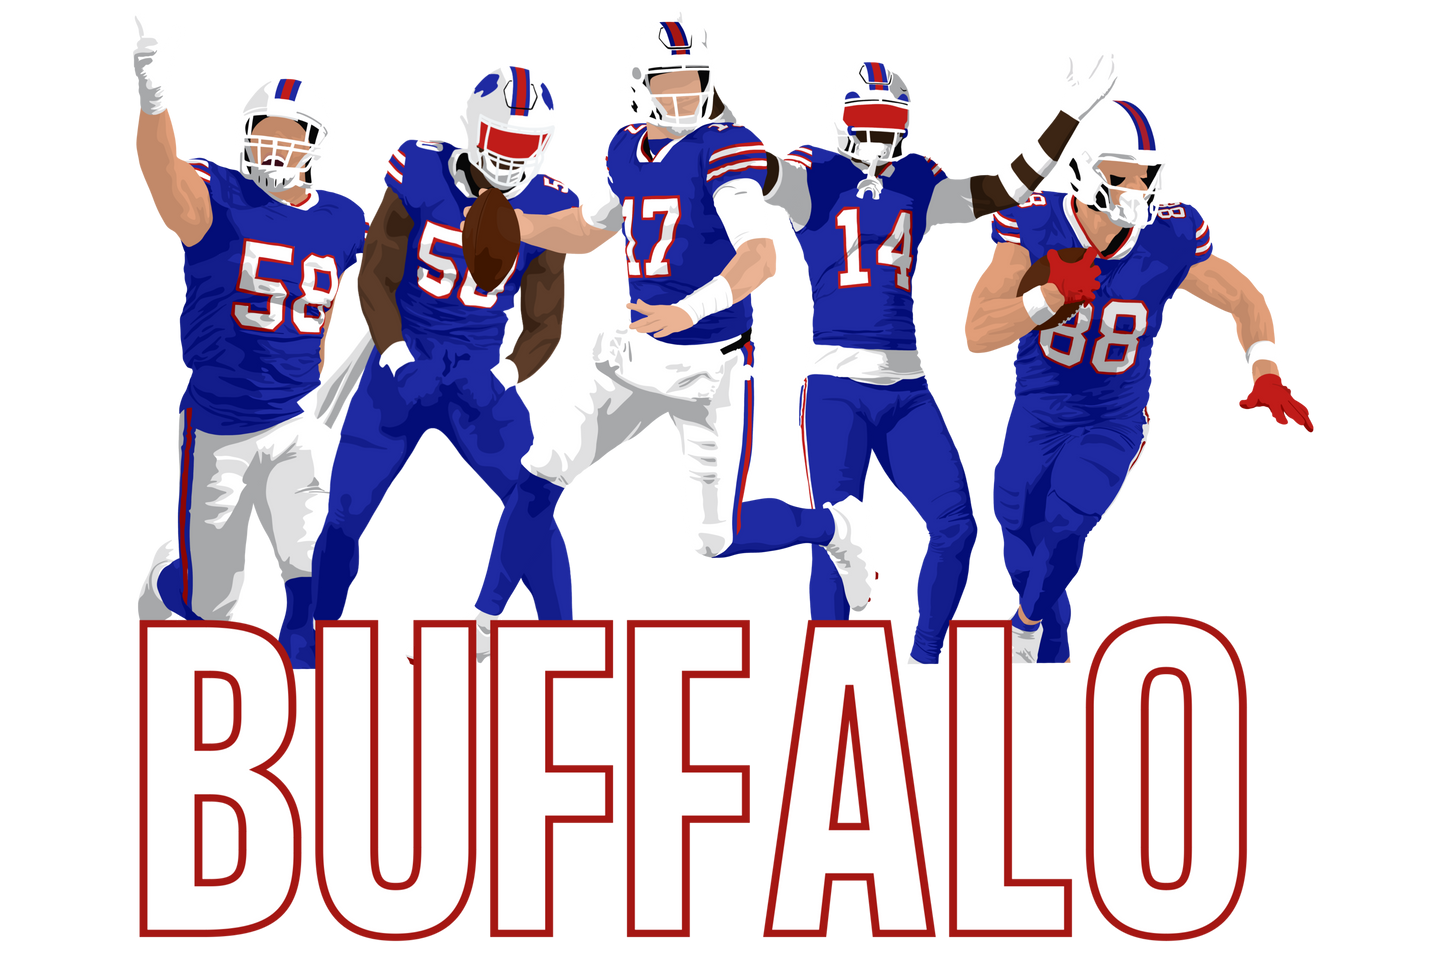 Buffalo w/ Players Graphic